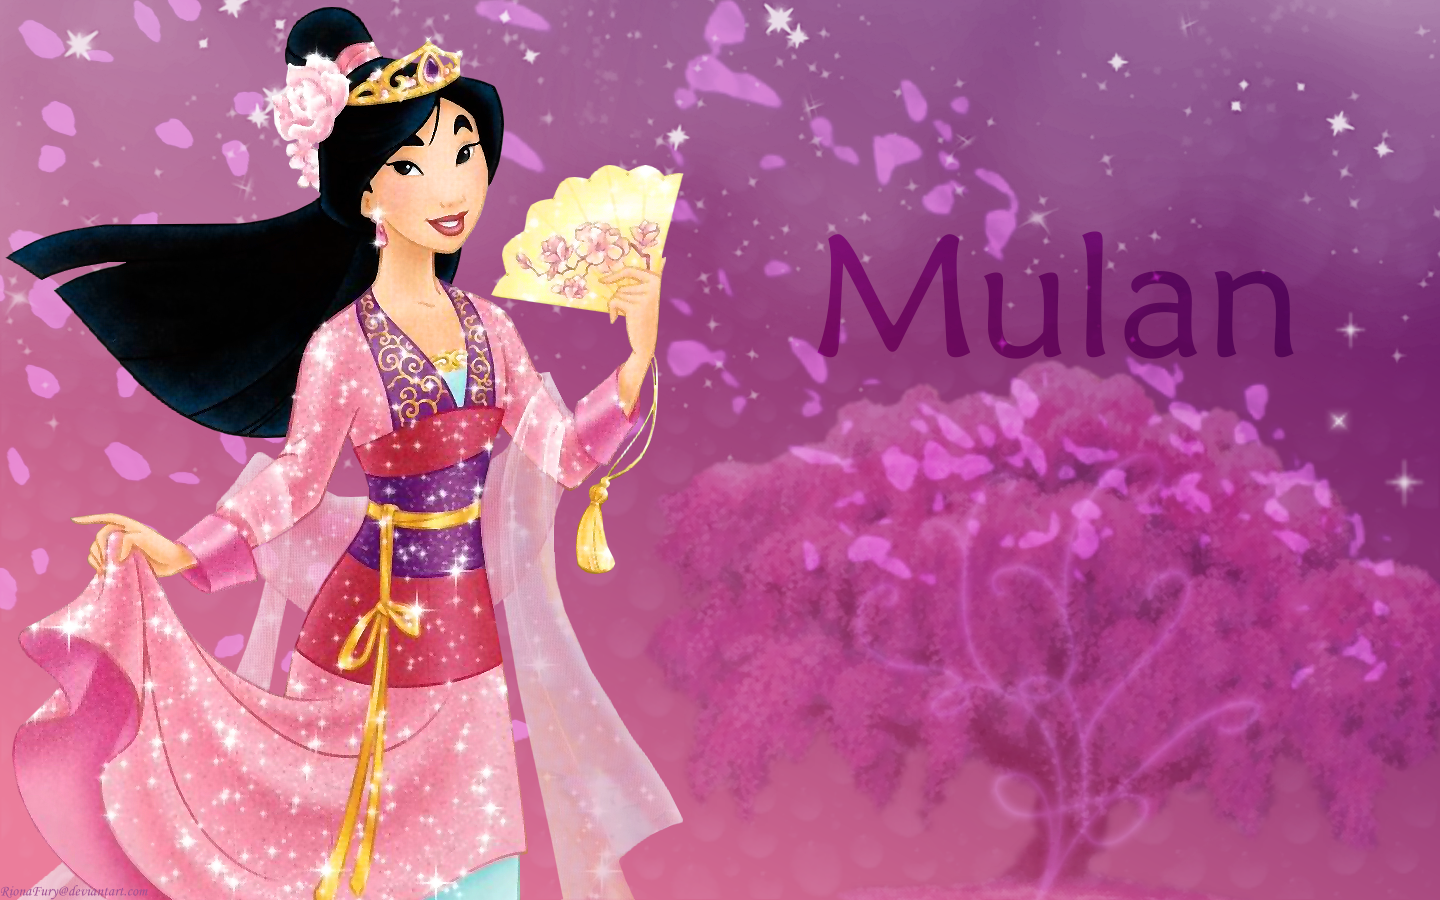 Disney Princess Wallpaper: Mulan. Disney princess, Disney, Mulan